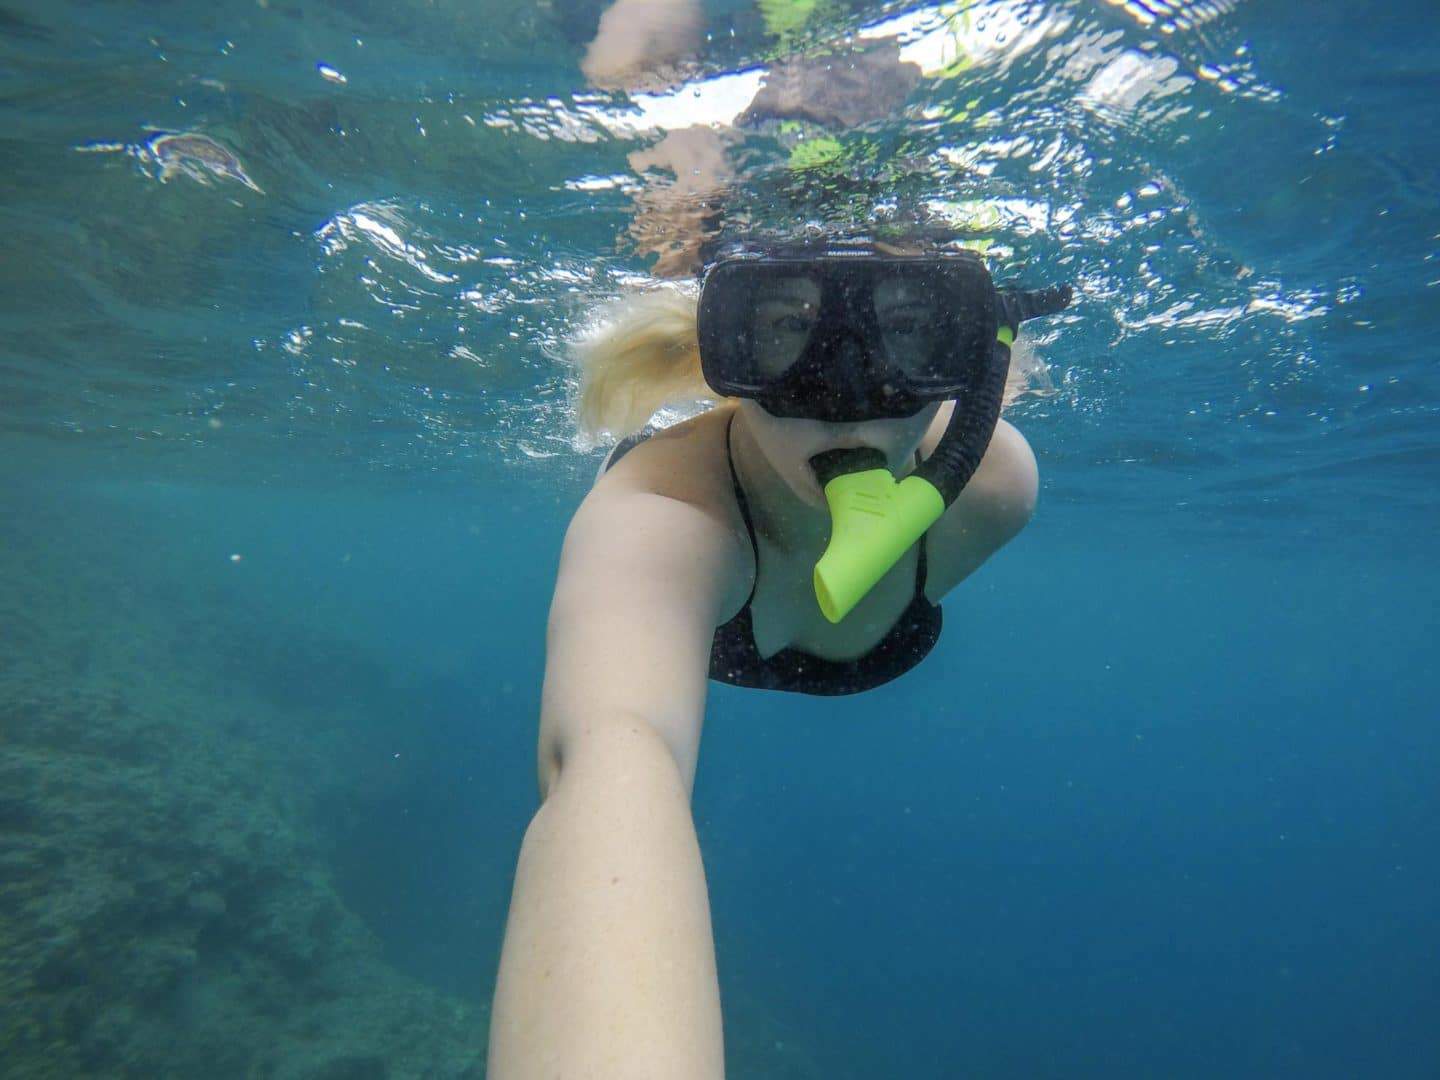 dominica travel guide, ellie quinn snorkelling in Dominica